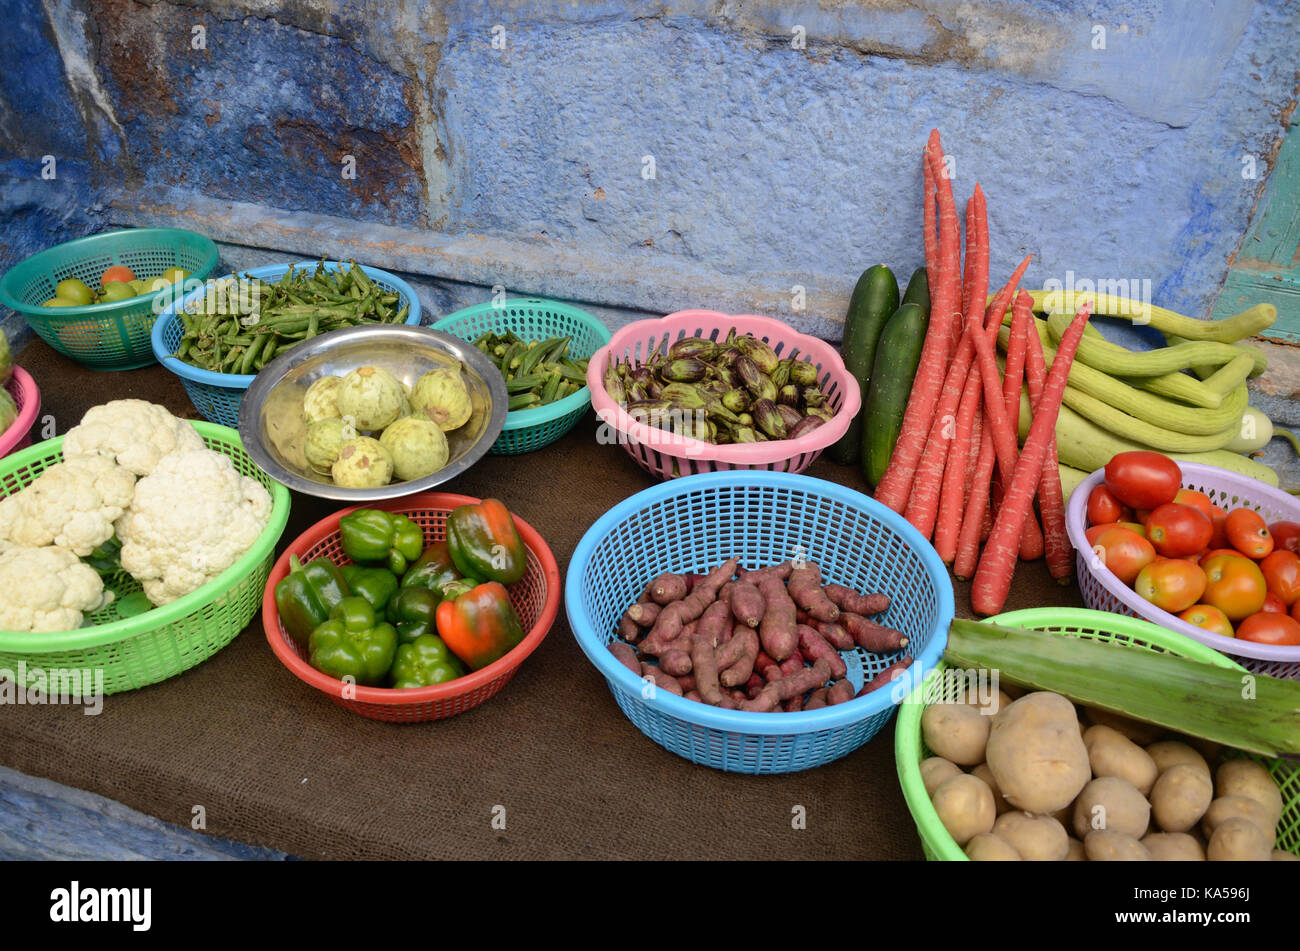 Vegetables stall in narrow lane, jodhpur, rajasthan, India, Asia Stock Photo